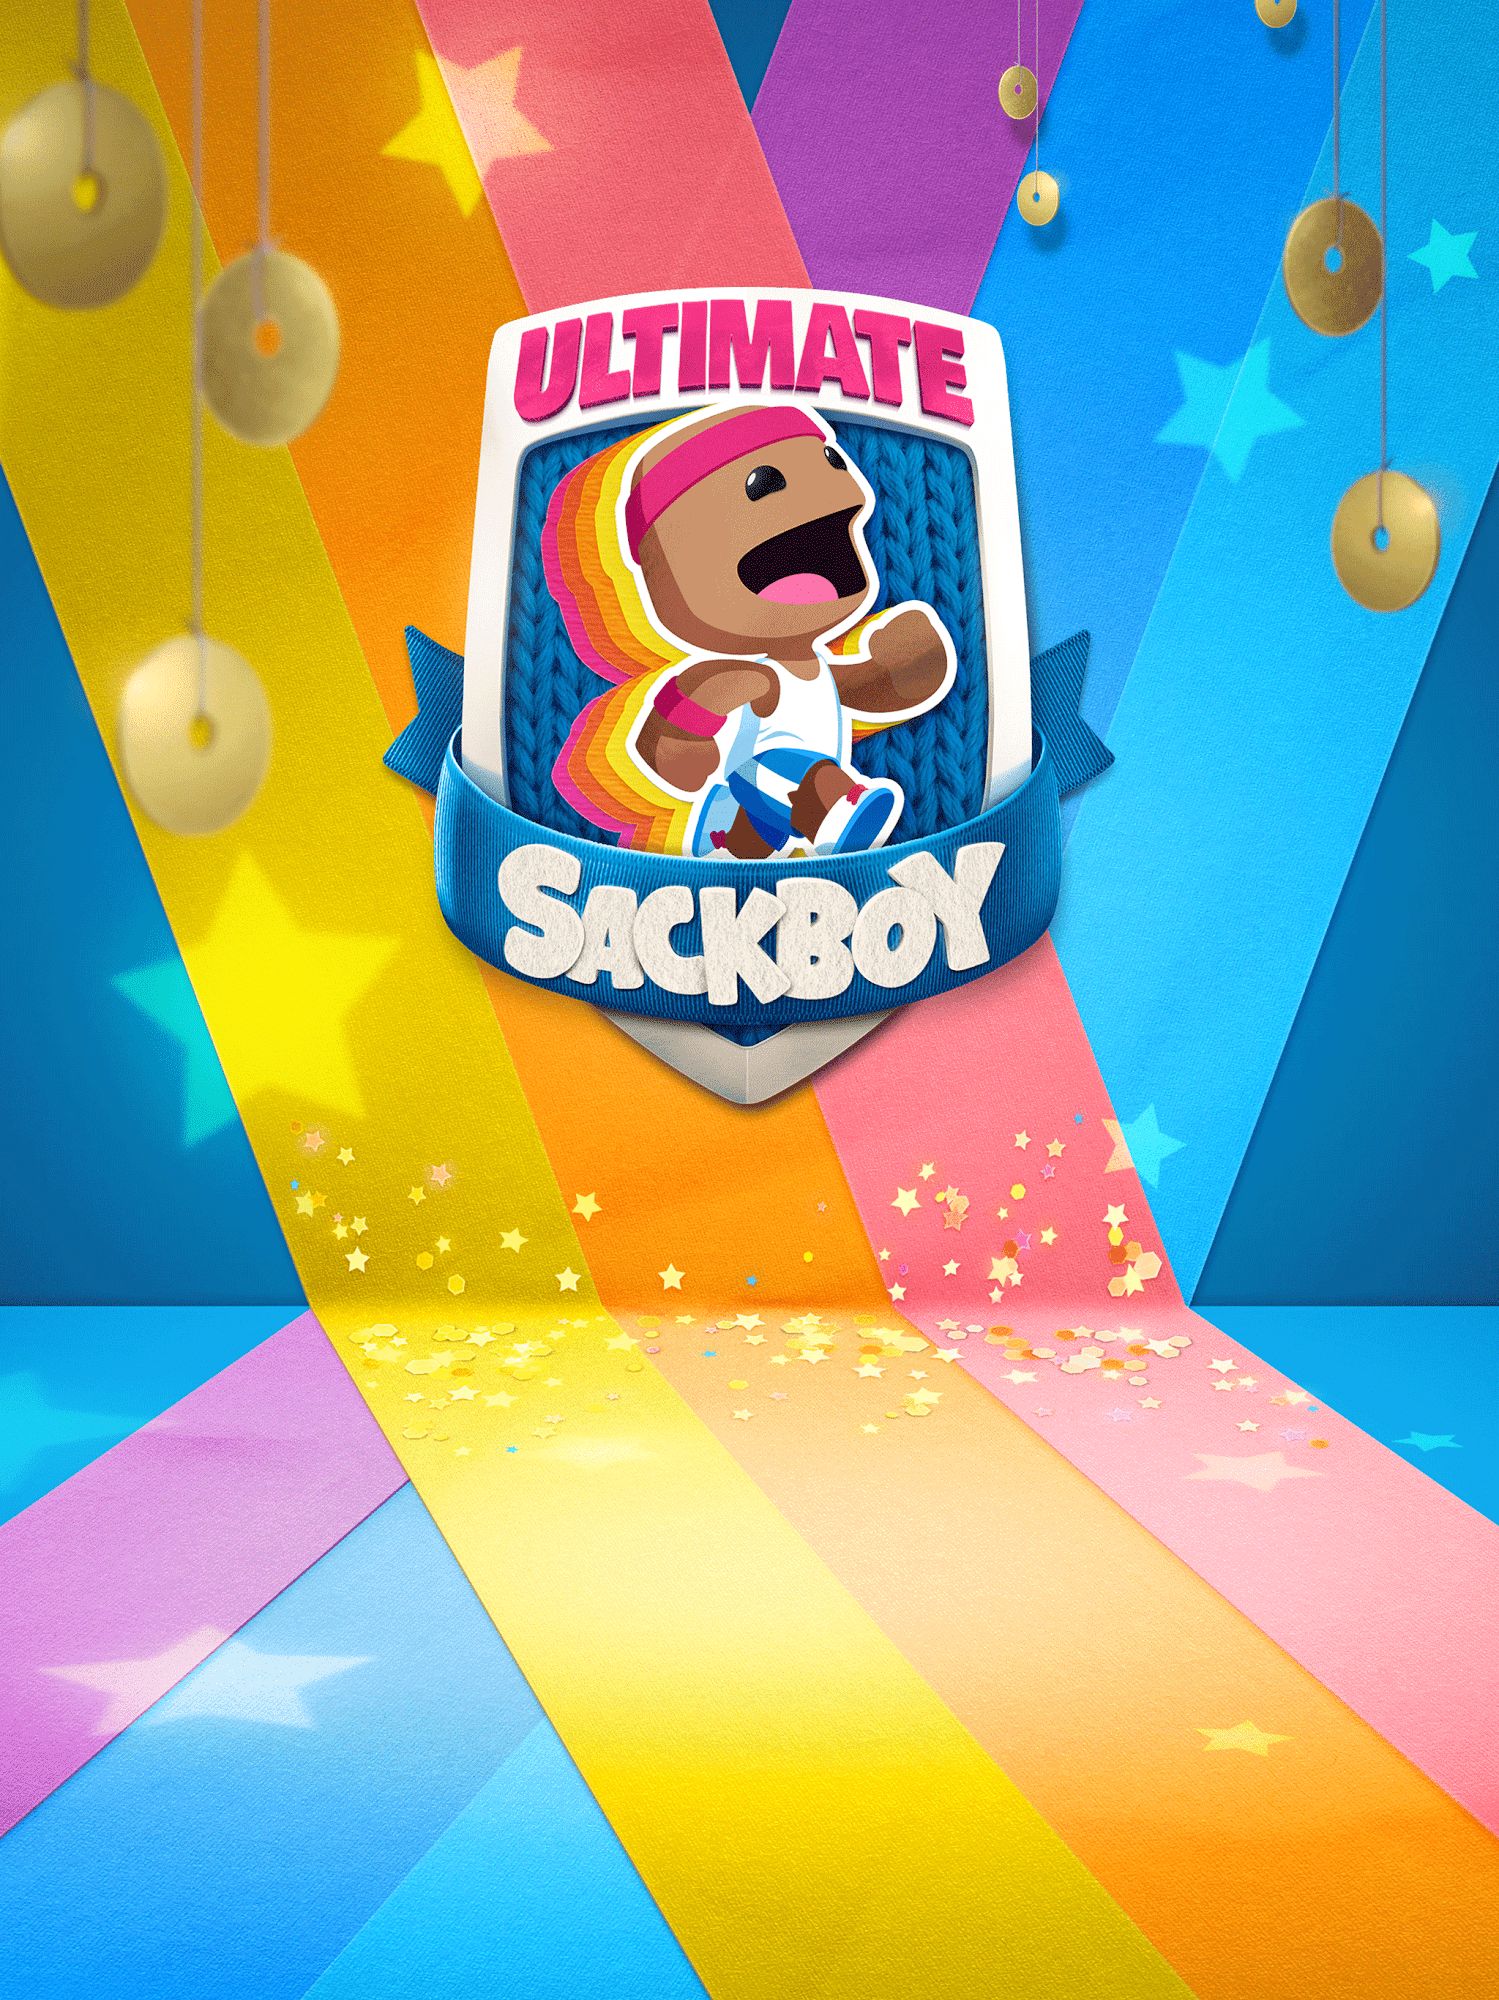 Descargar Ultimate Sackboy gratis para Android.